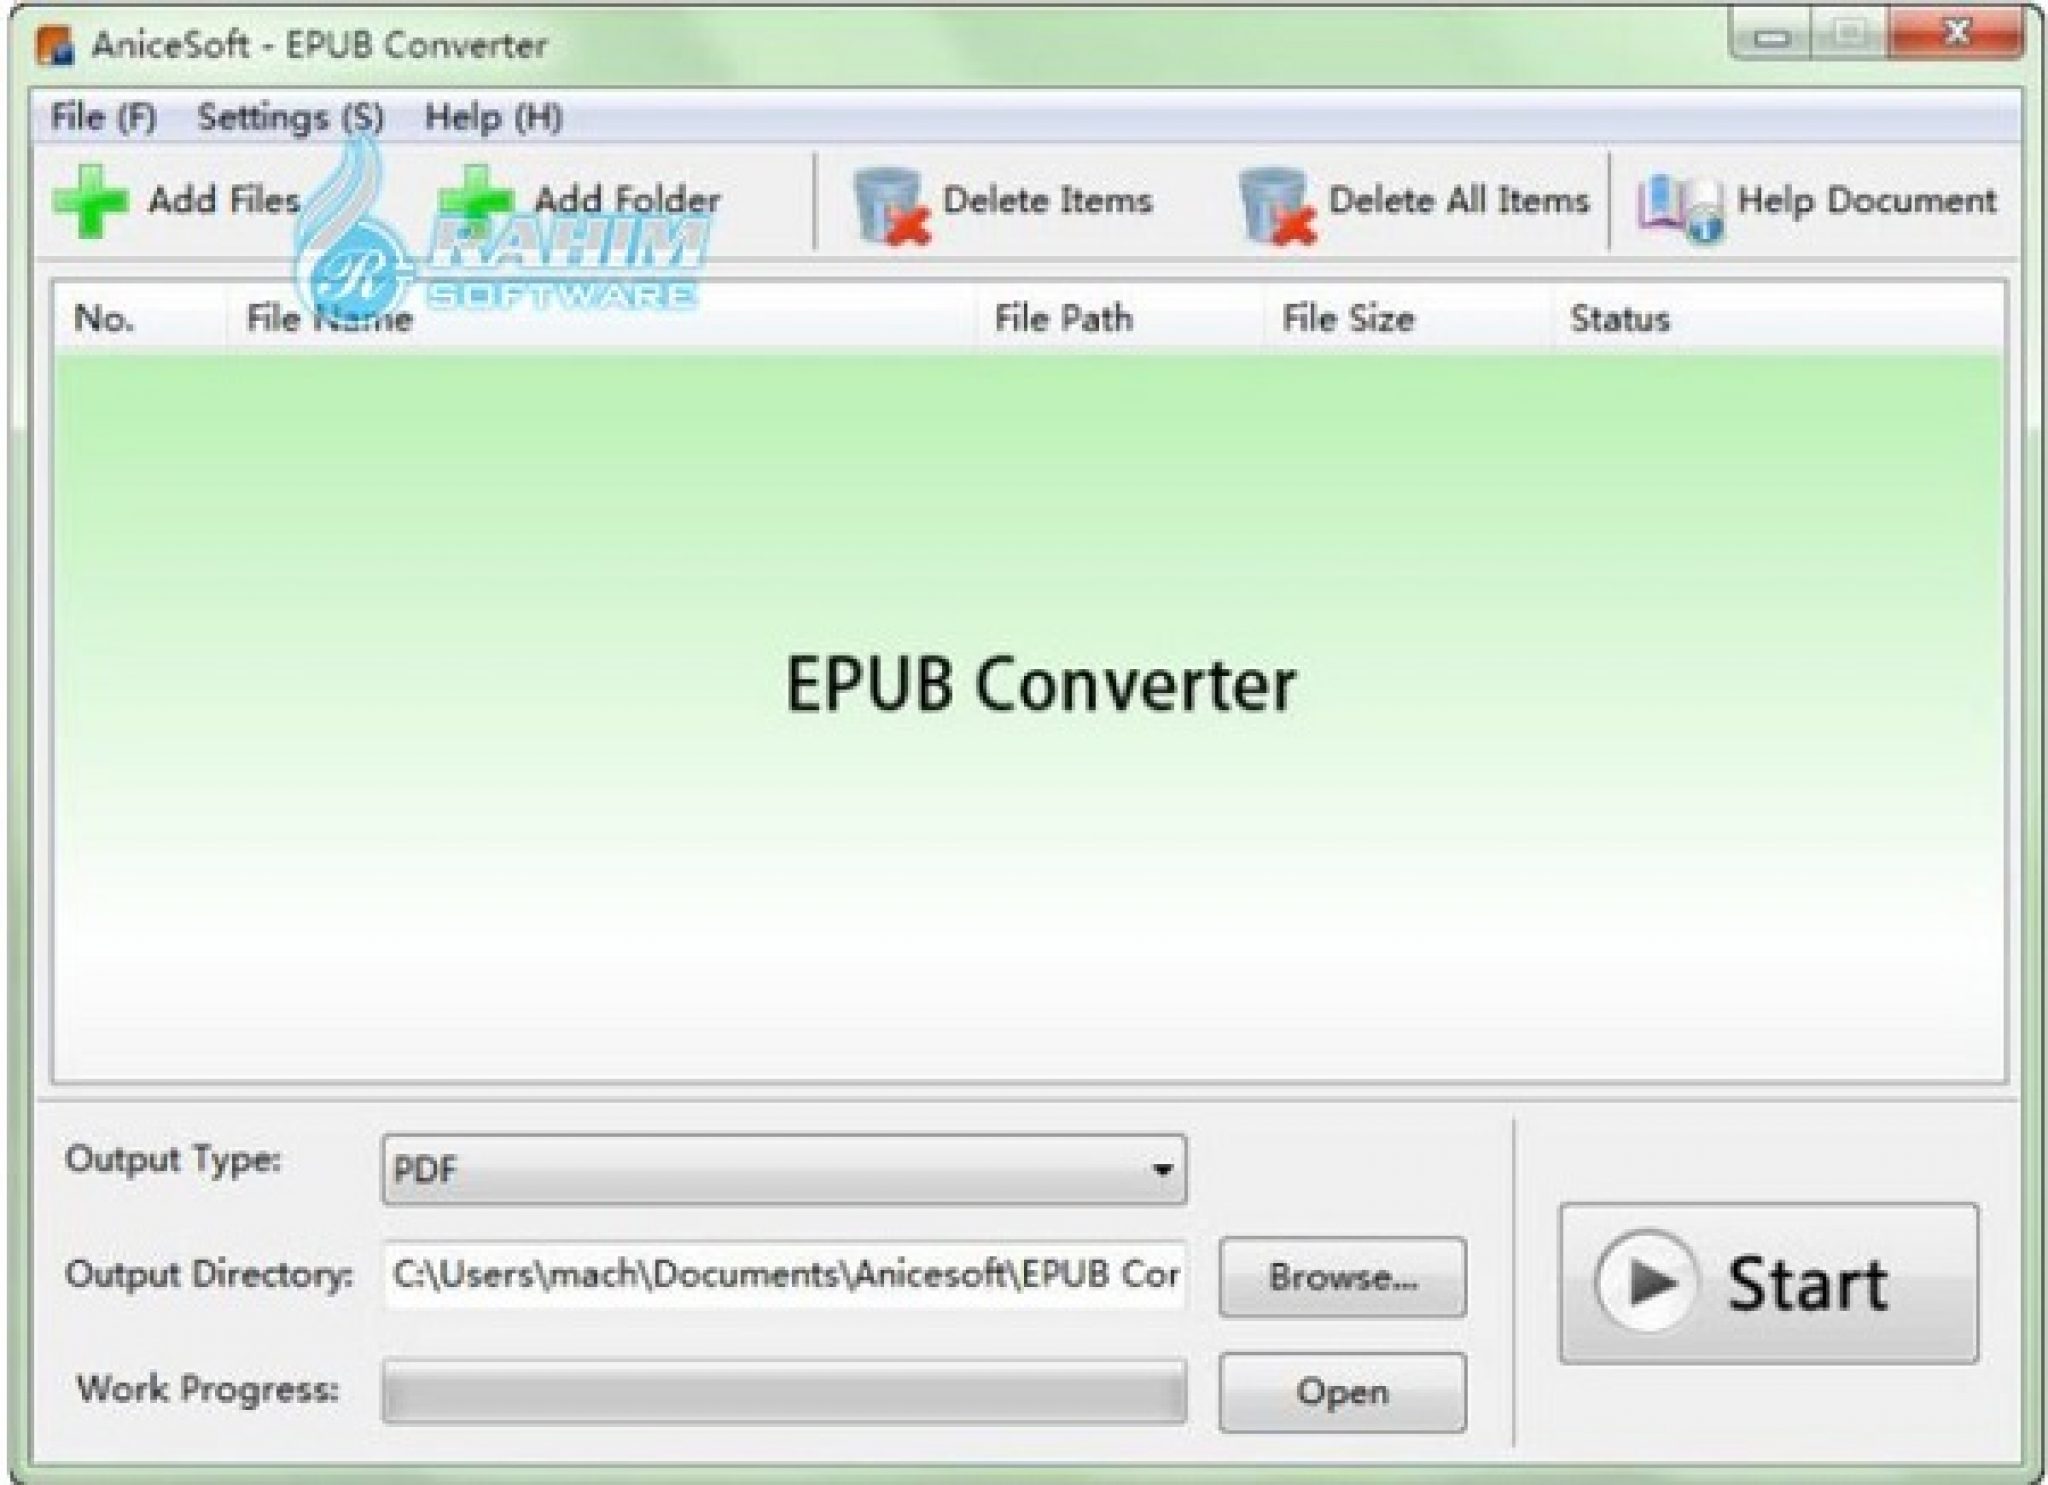 convert a pdf to epub